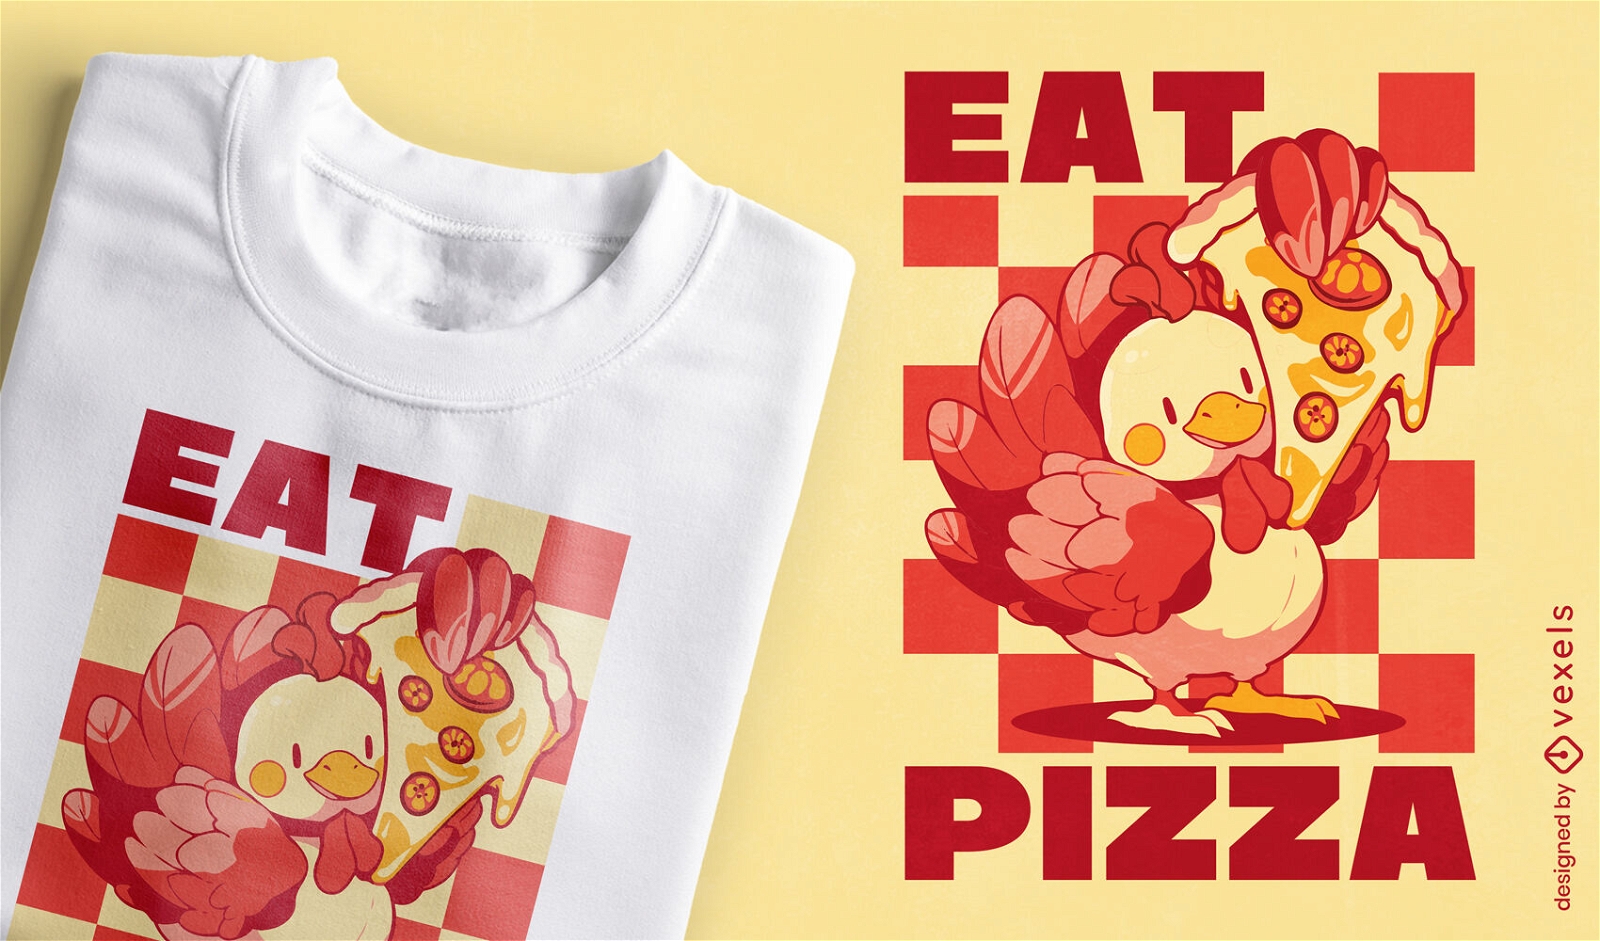 Eat pizza turkeyt-shirt design